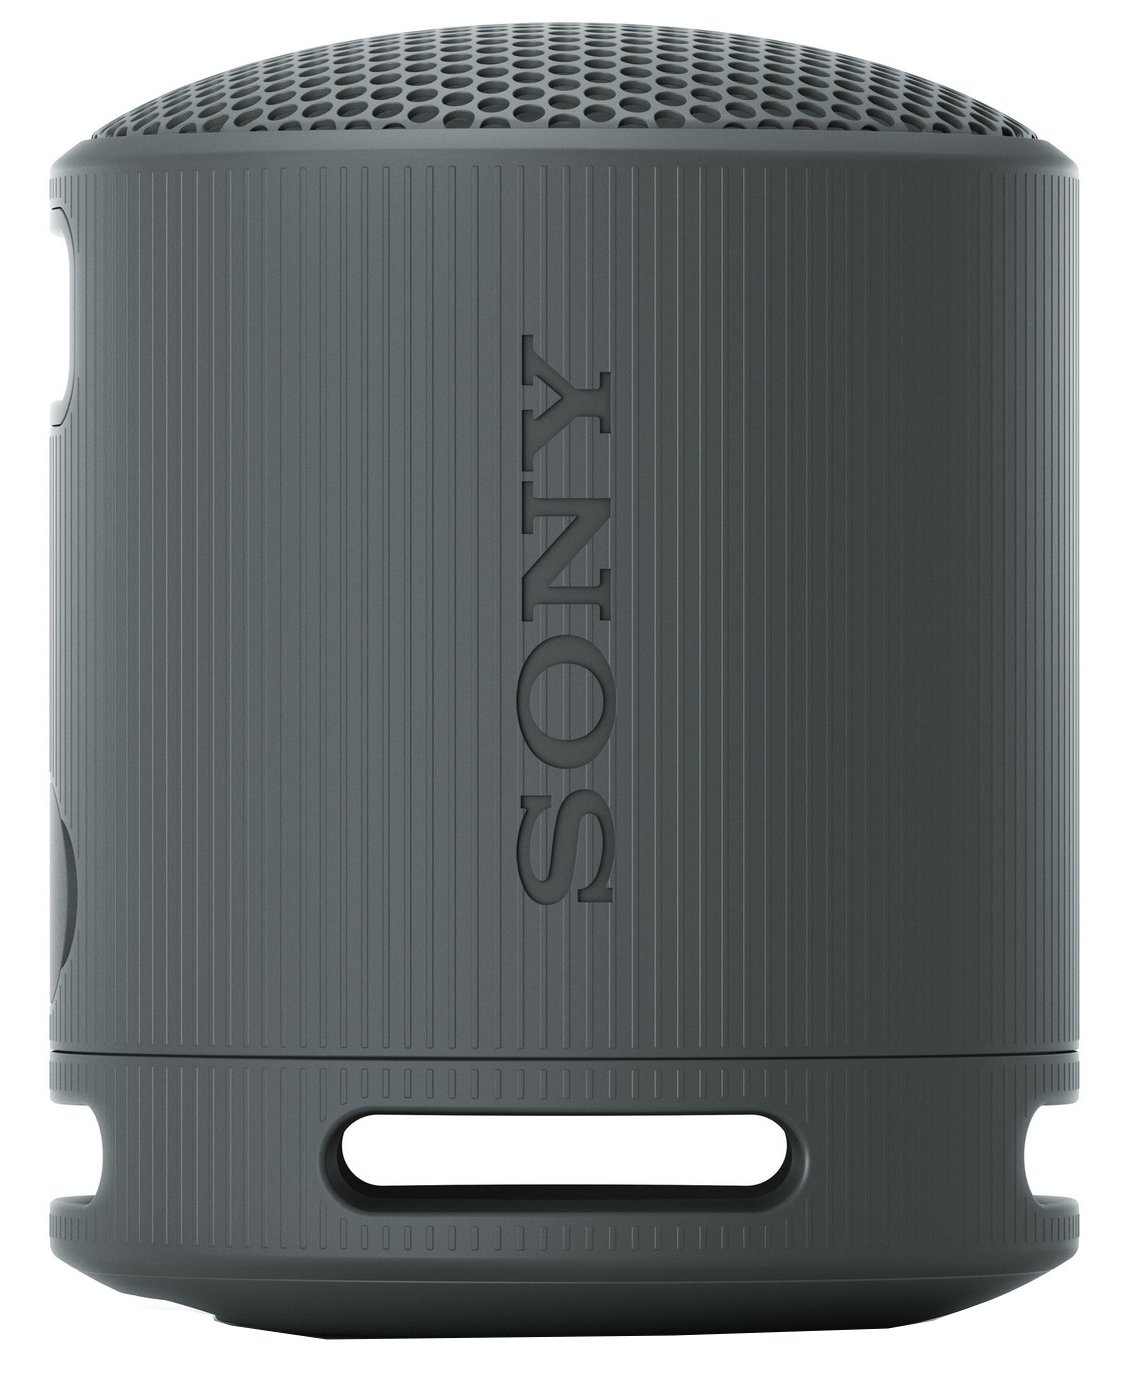 Sony SRS-XB100 Bluetooth Portable Speaker - Black